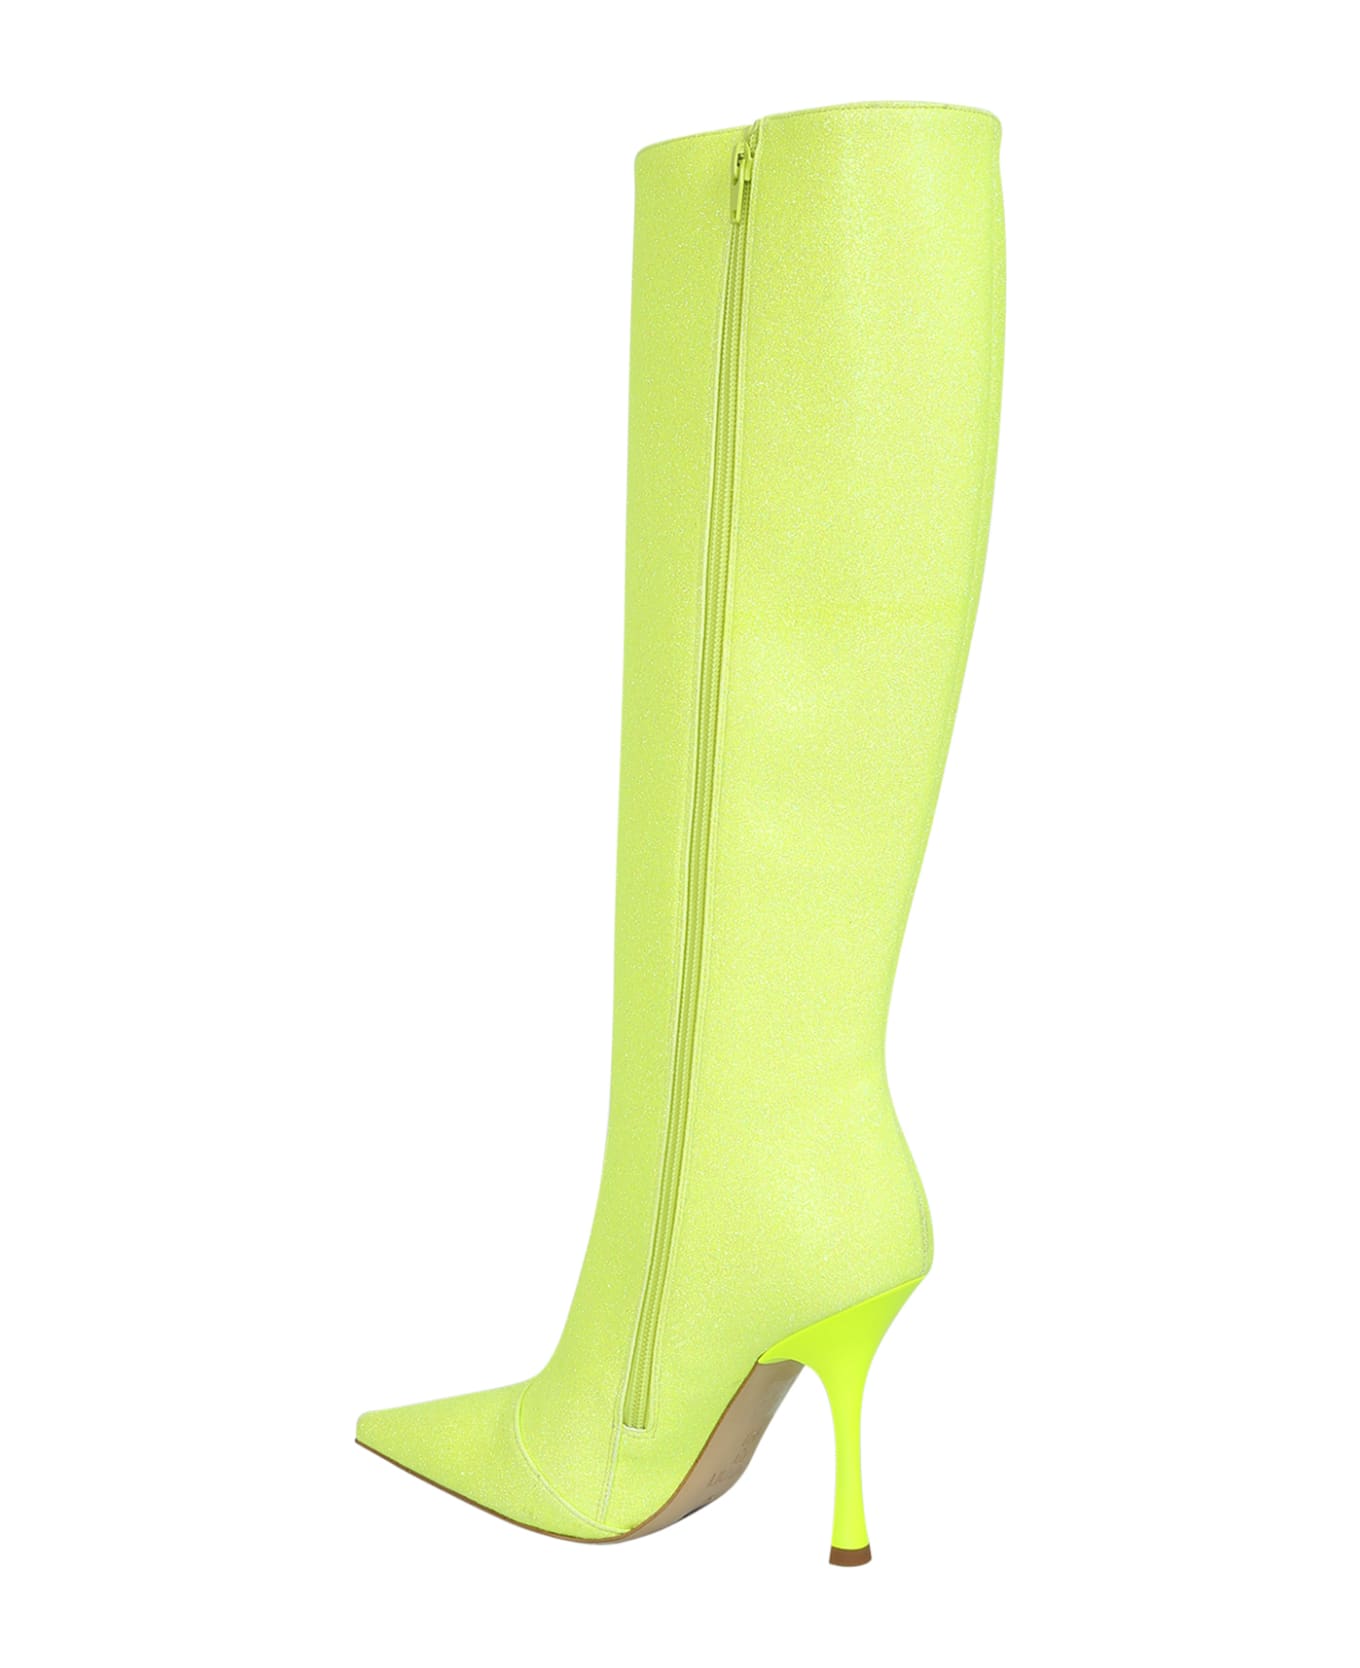 Leonie Hanne High-heel Micro-glitter Boots - Yellow ブーツ